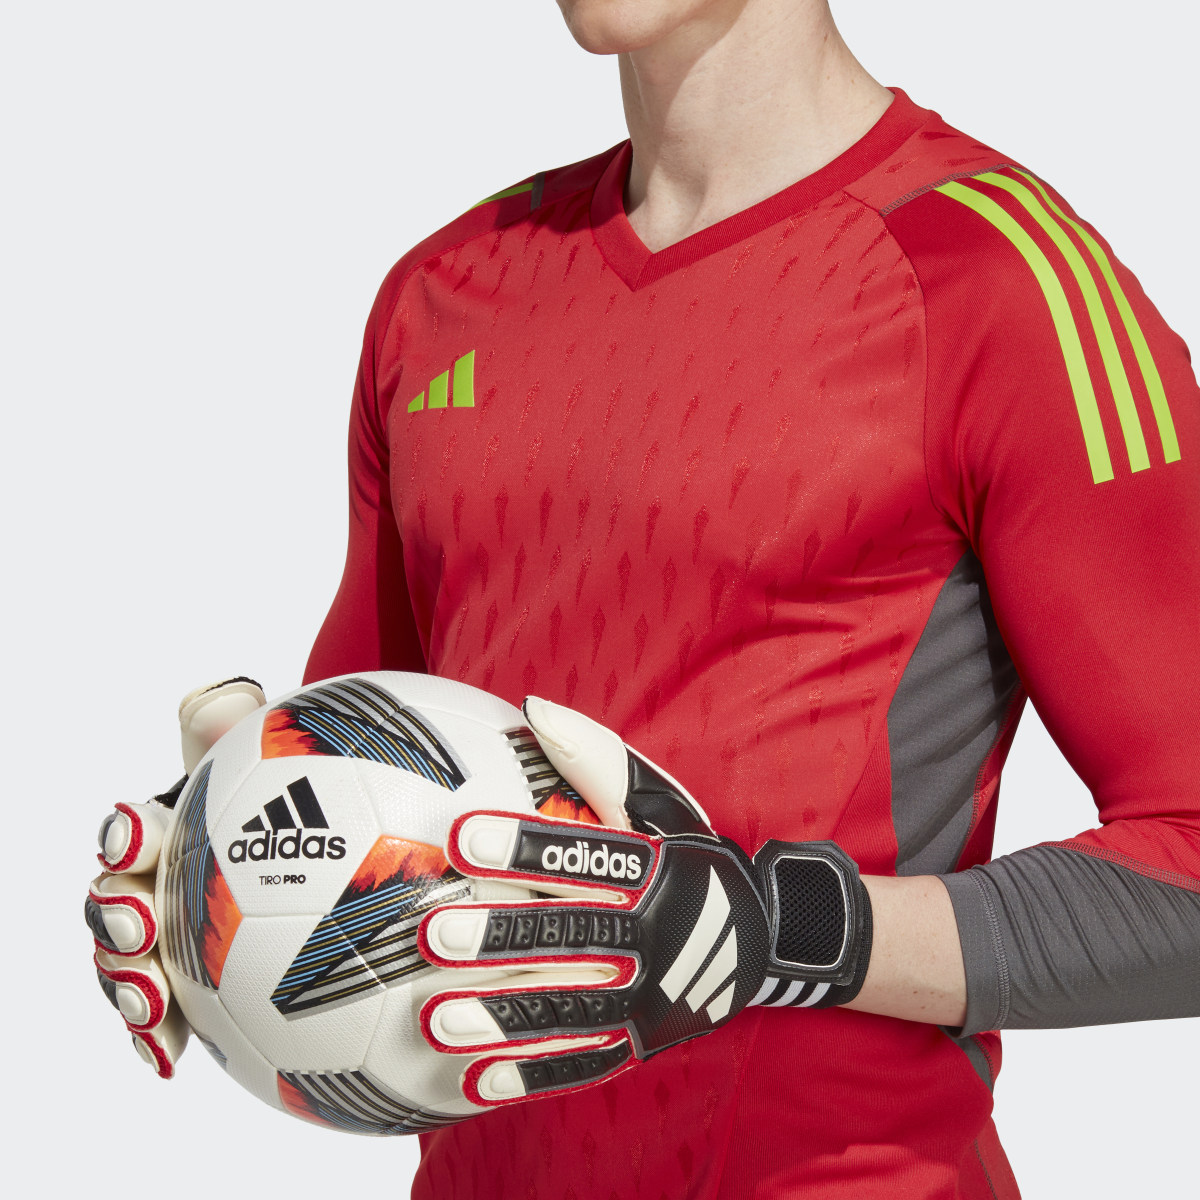 Adidas Tiro Pro Goalkeeper Gloves. 7